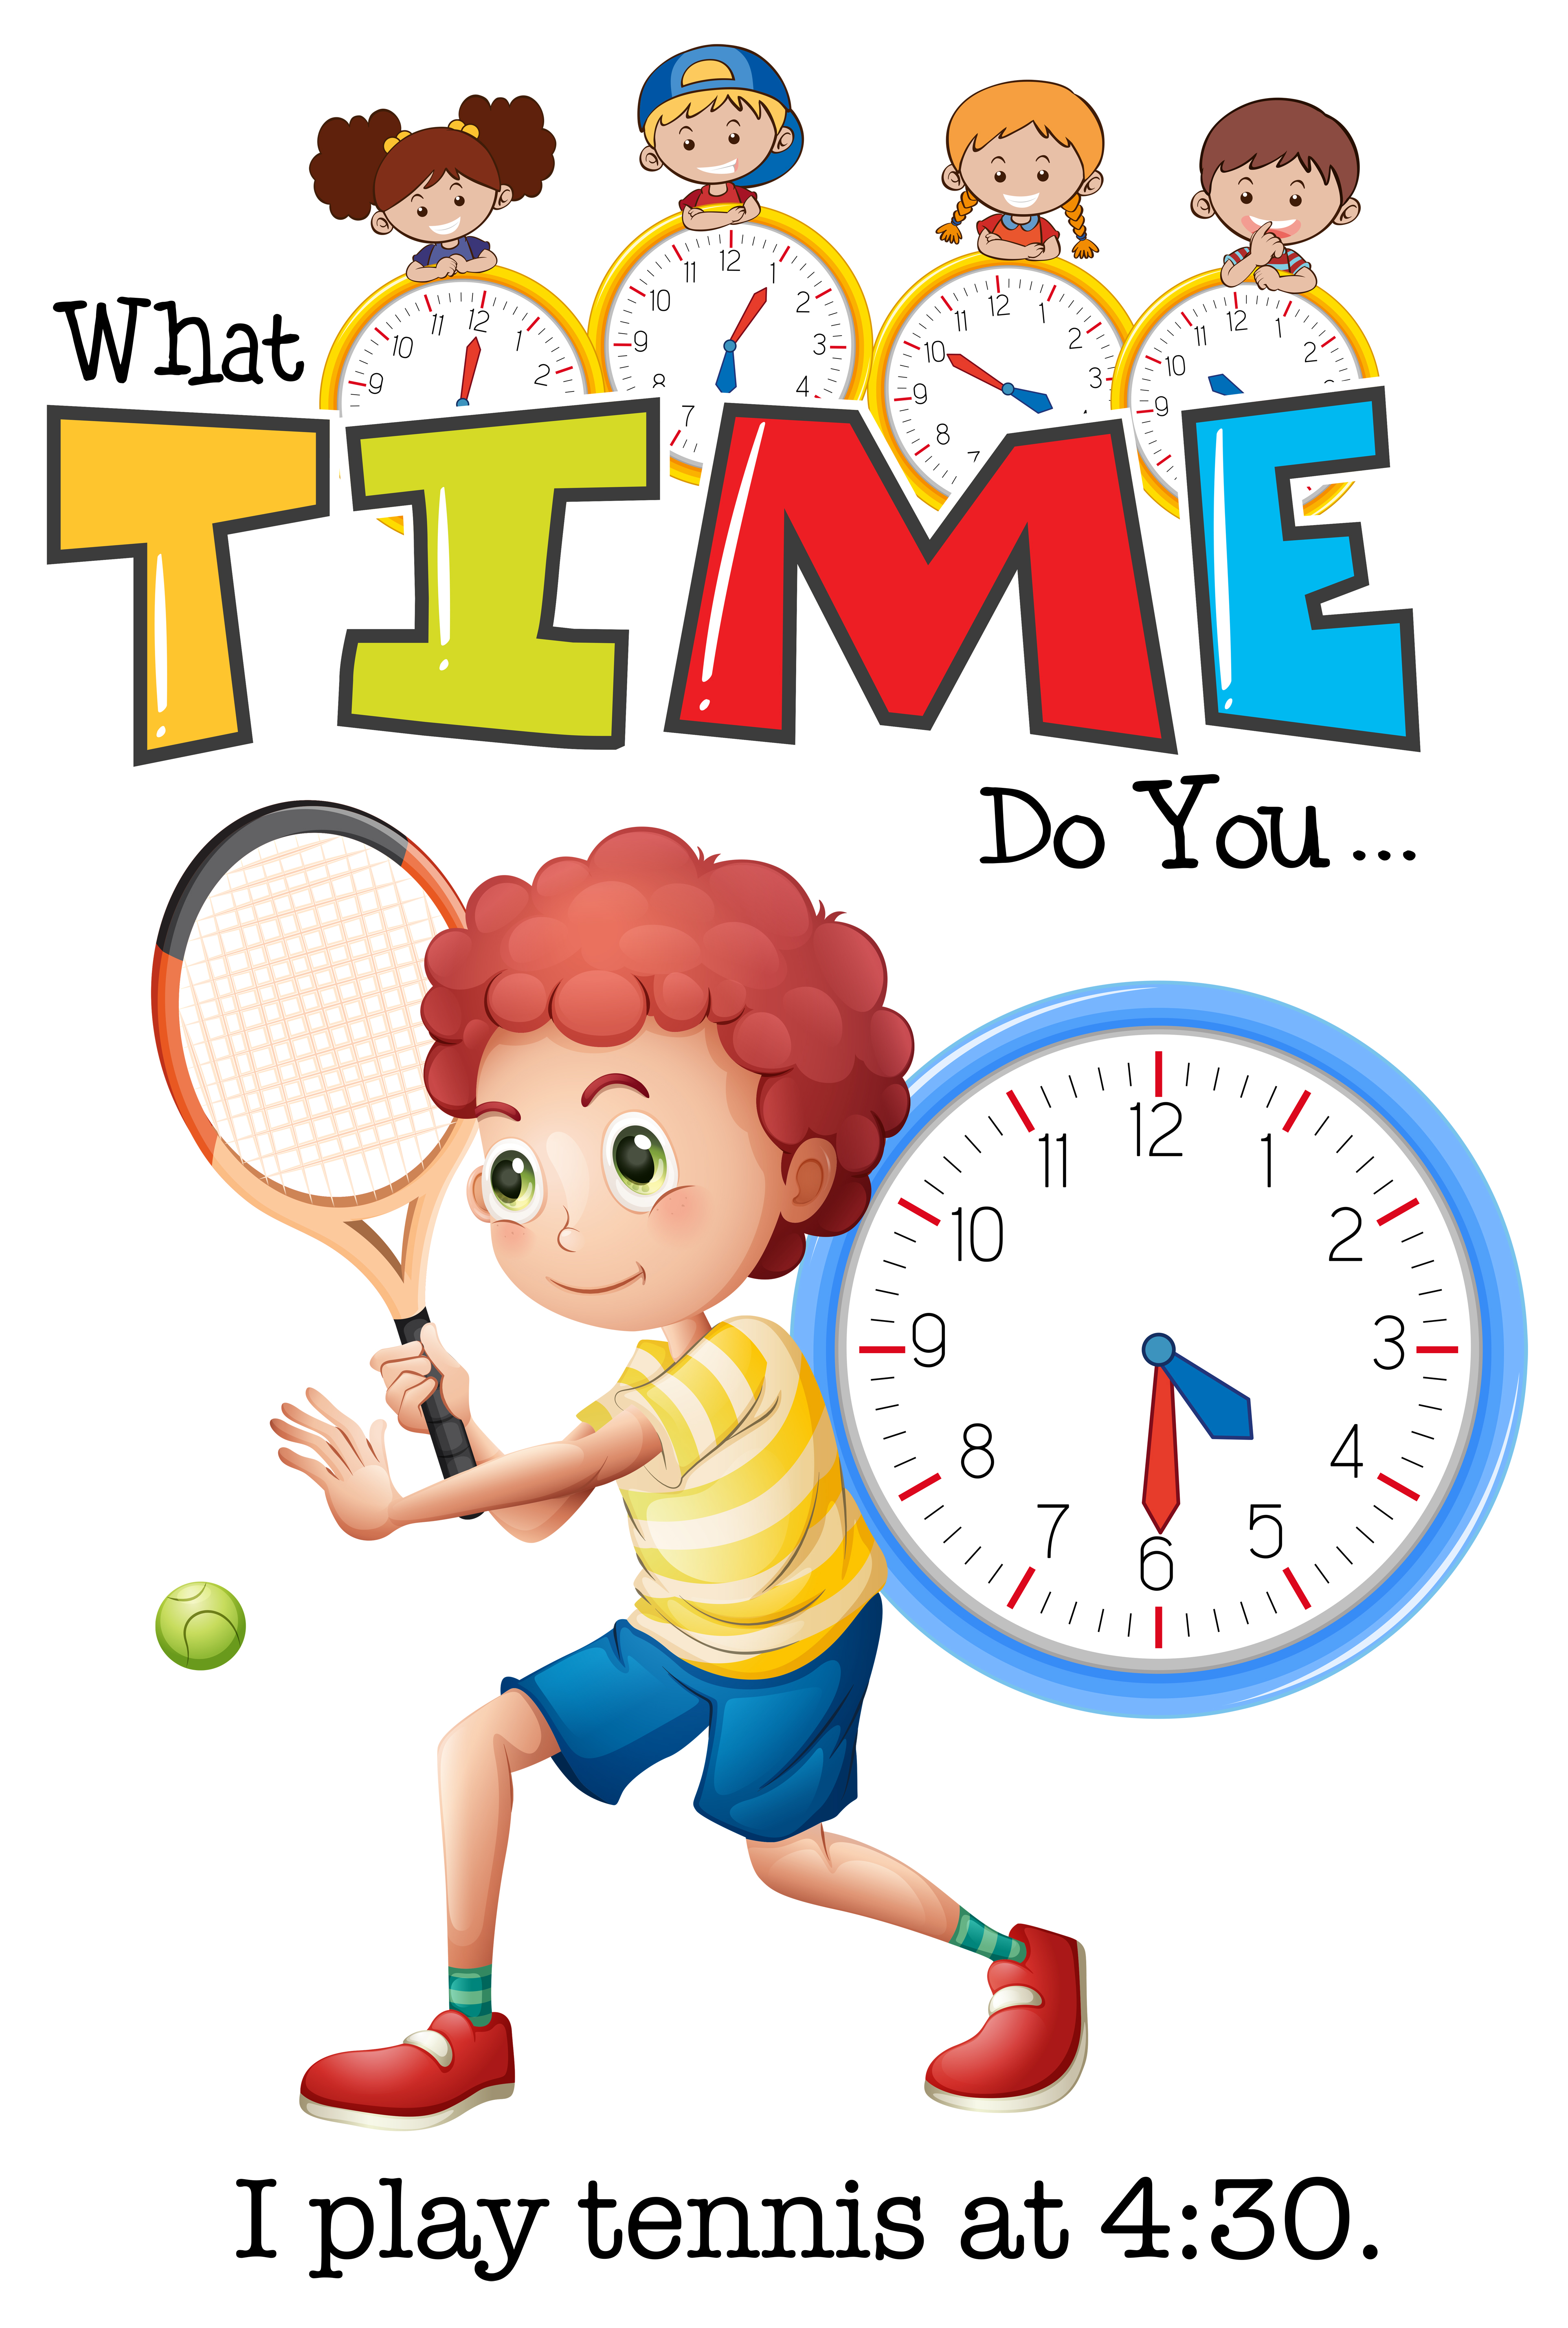 Download A boy play tennis at 4:30 - Download Free Vectors, Clipart ...